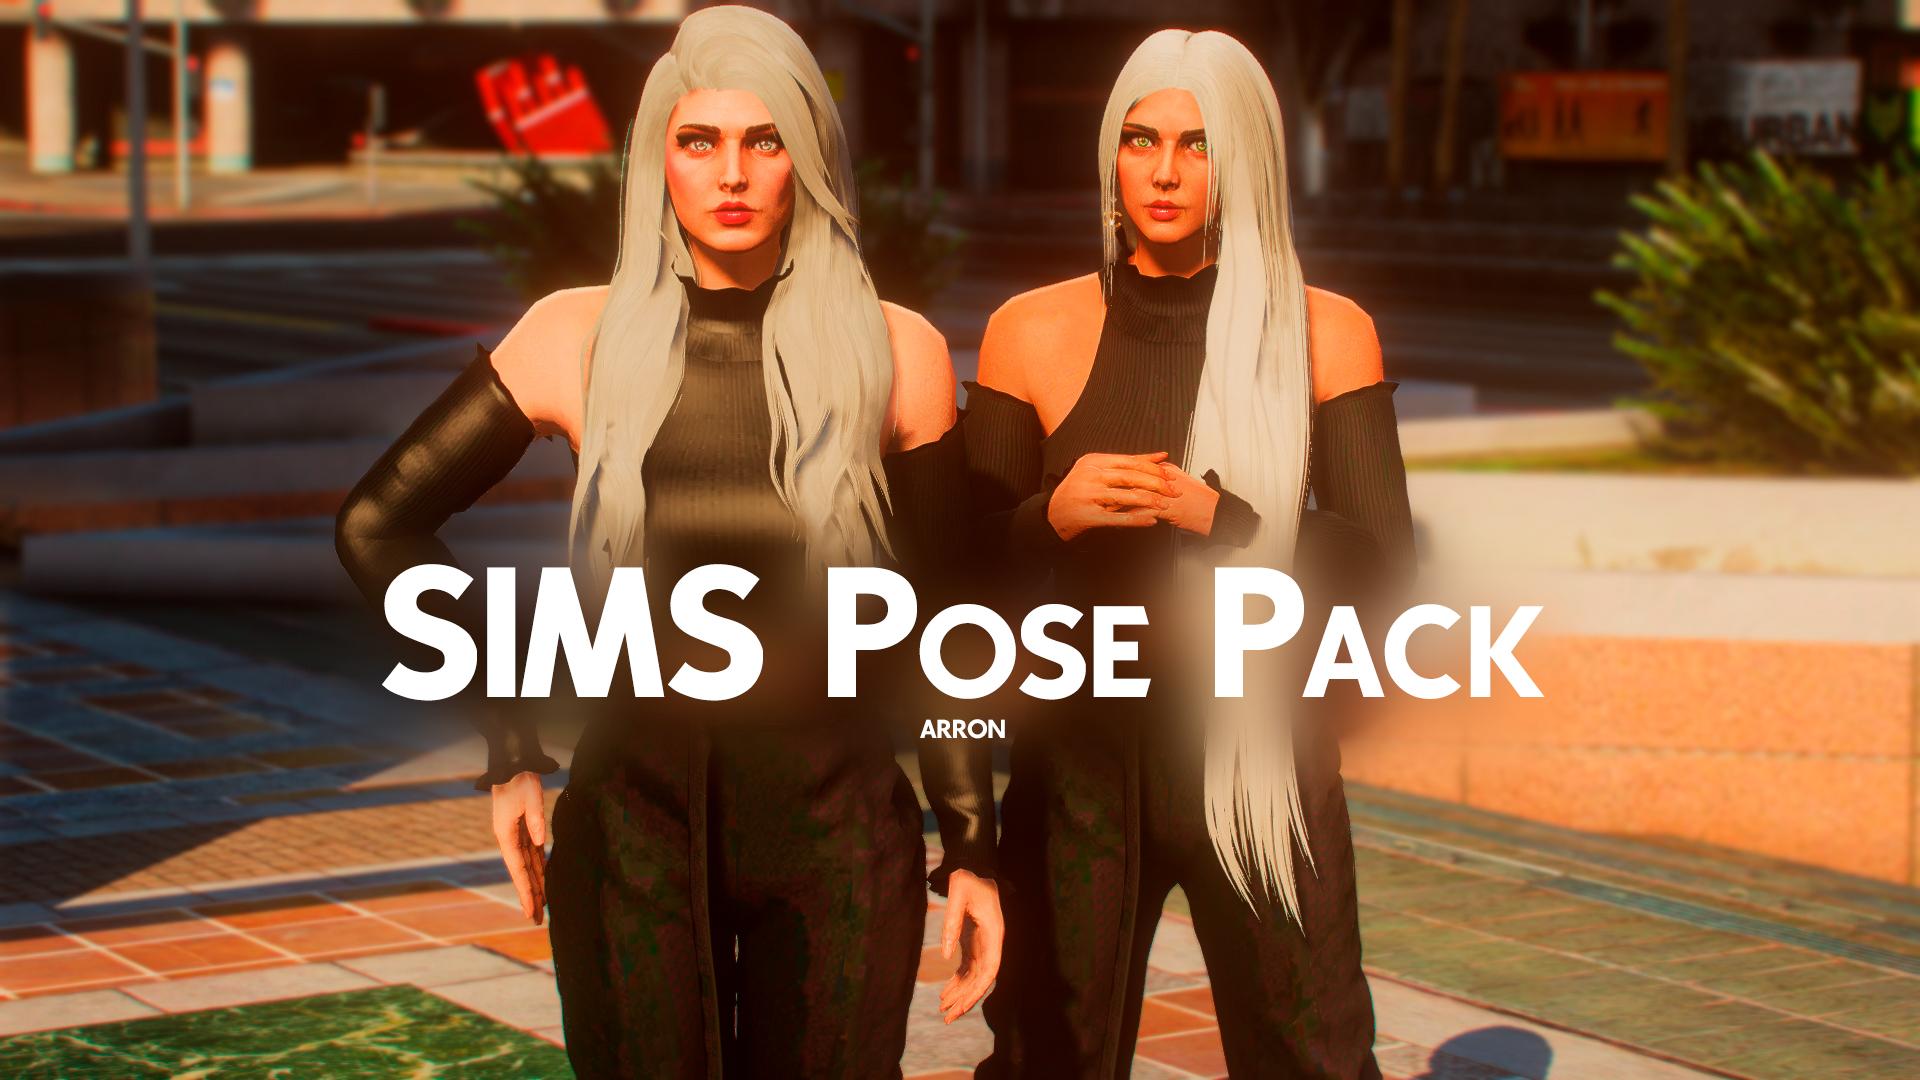 SANAY] Female single poses 10 | sanay | Sims 4, Sims 4 characters, Sims 4  mods